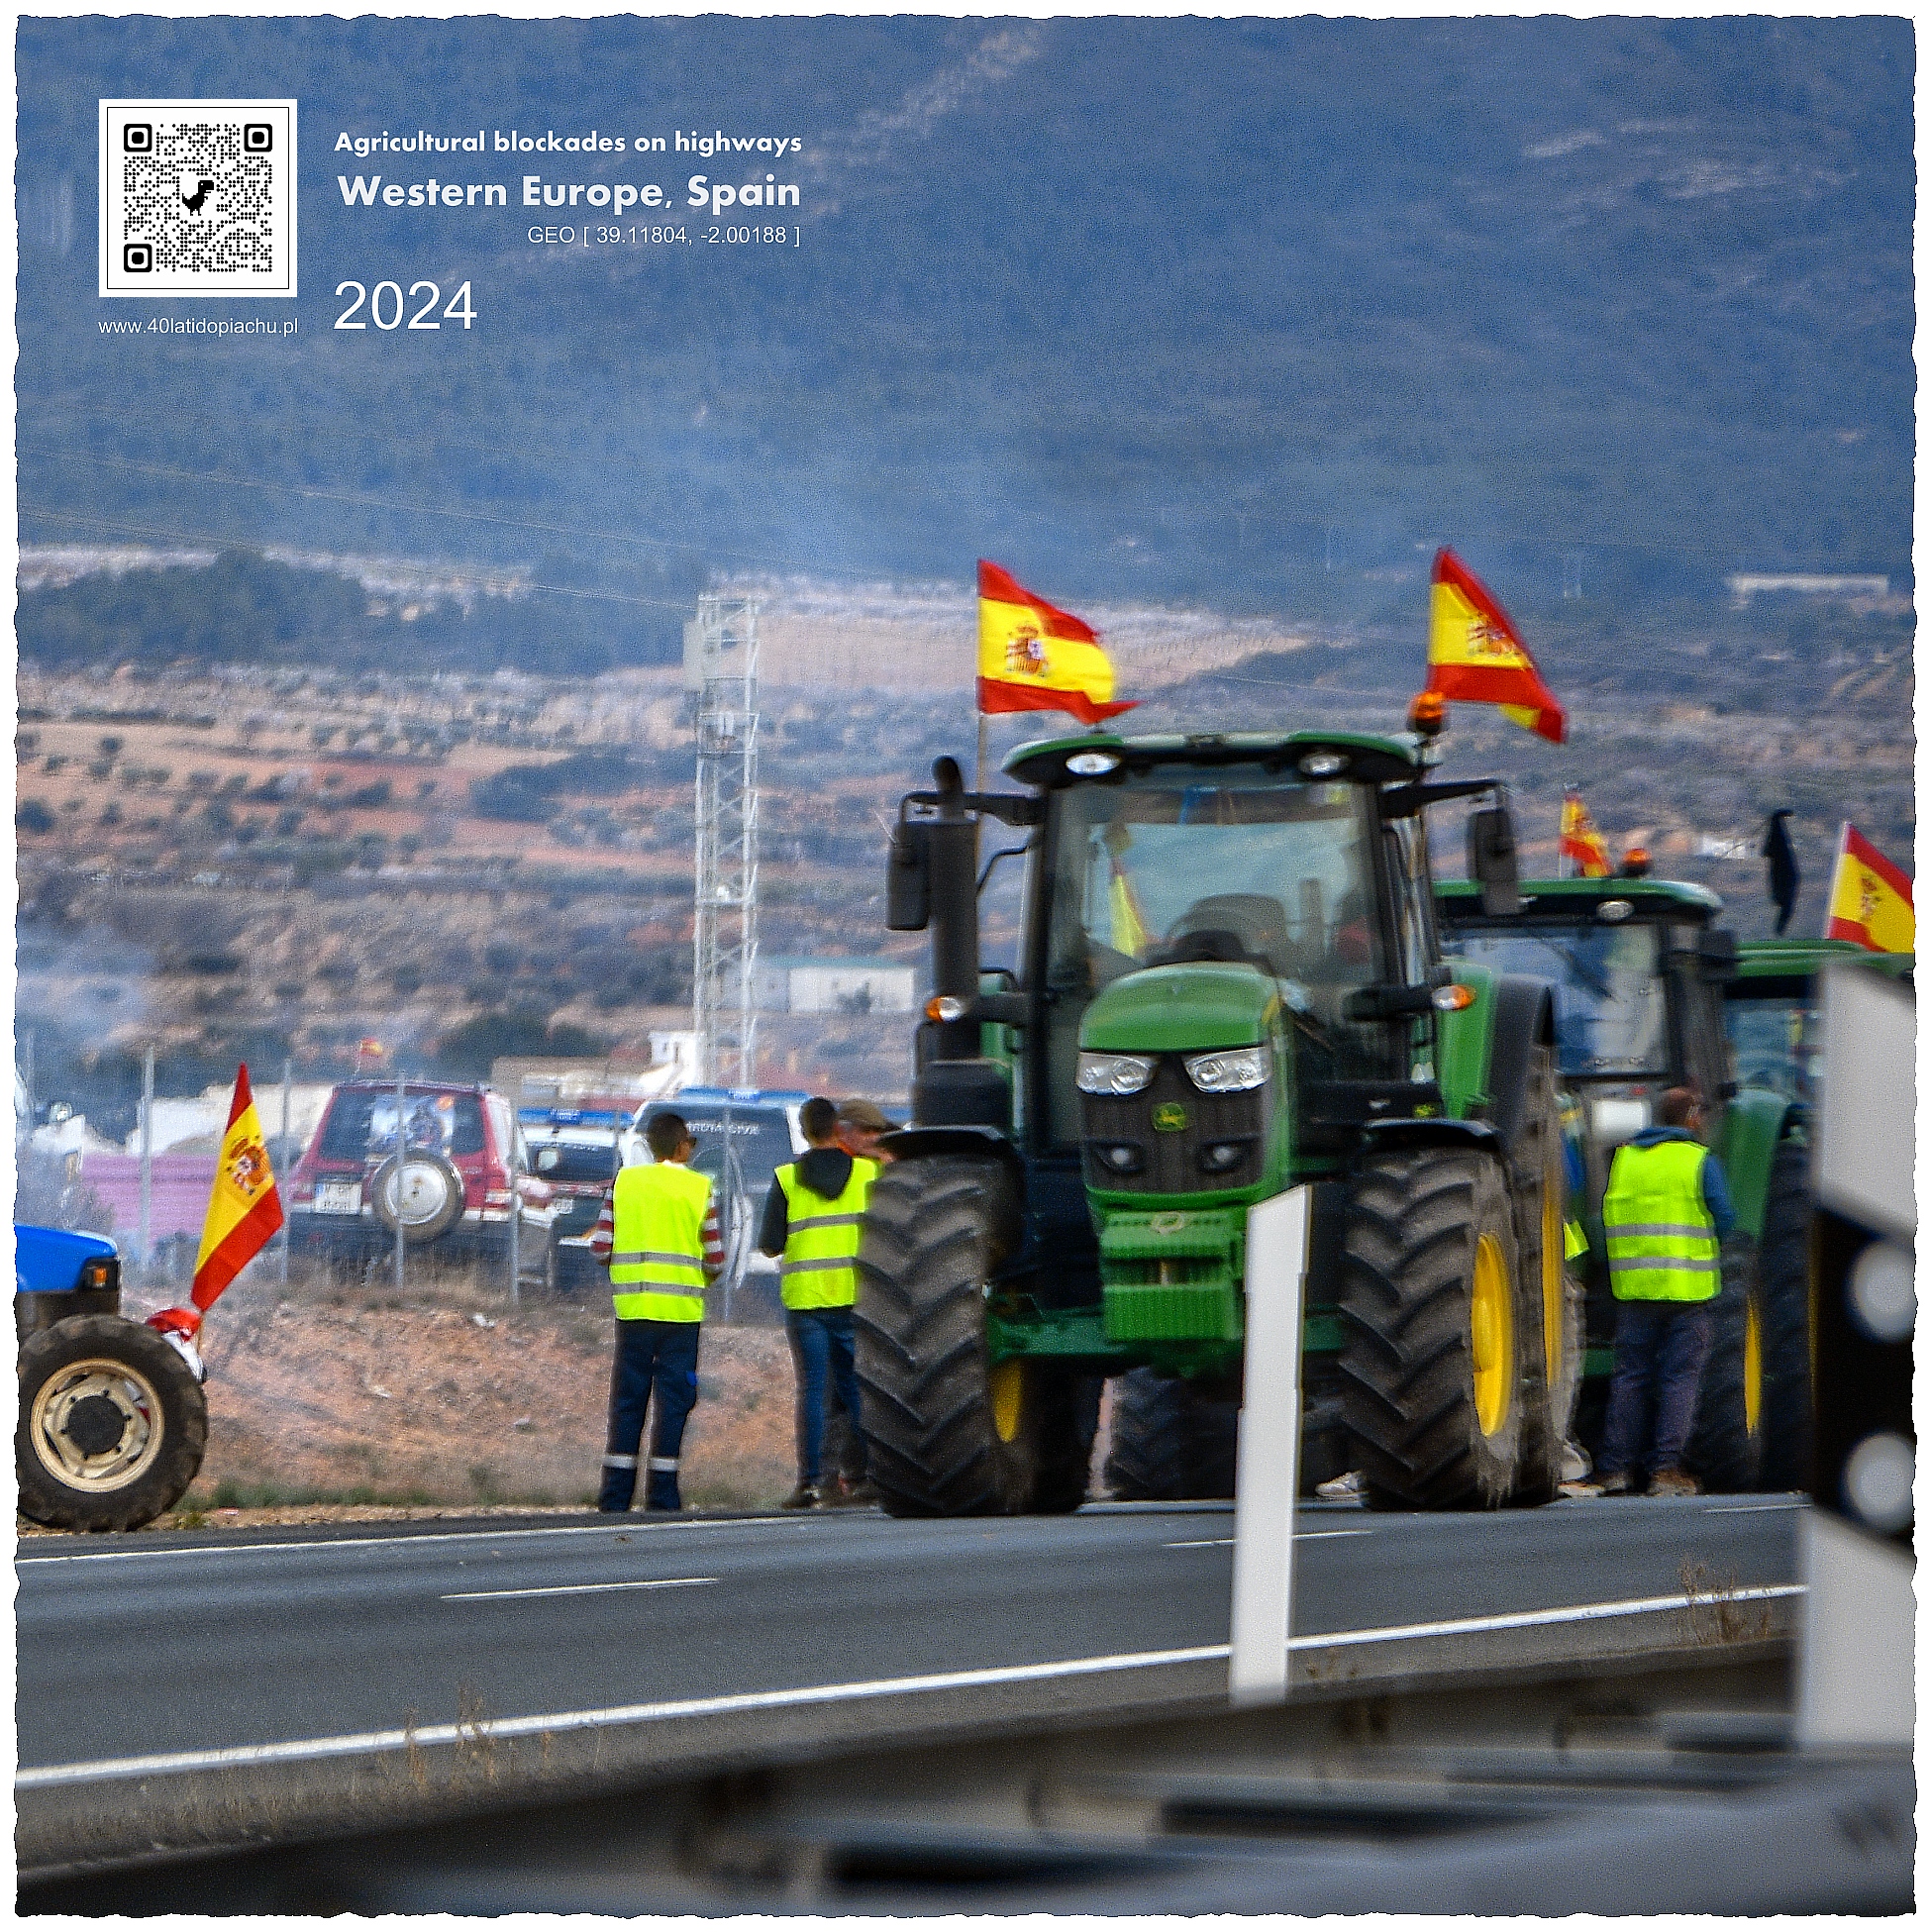 Hiszpania - rolnicze blokady autostrad